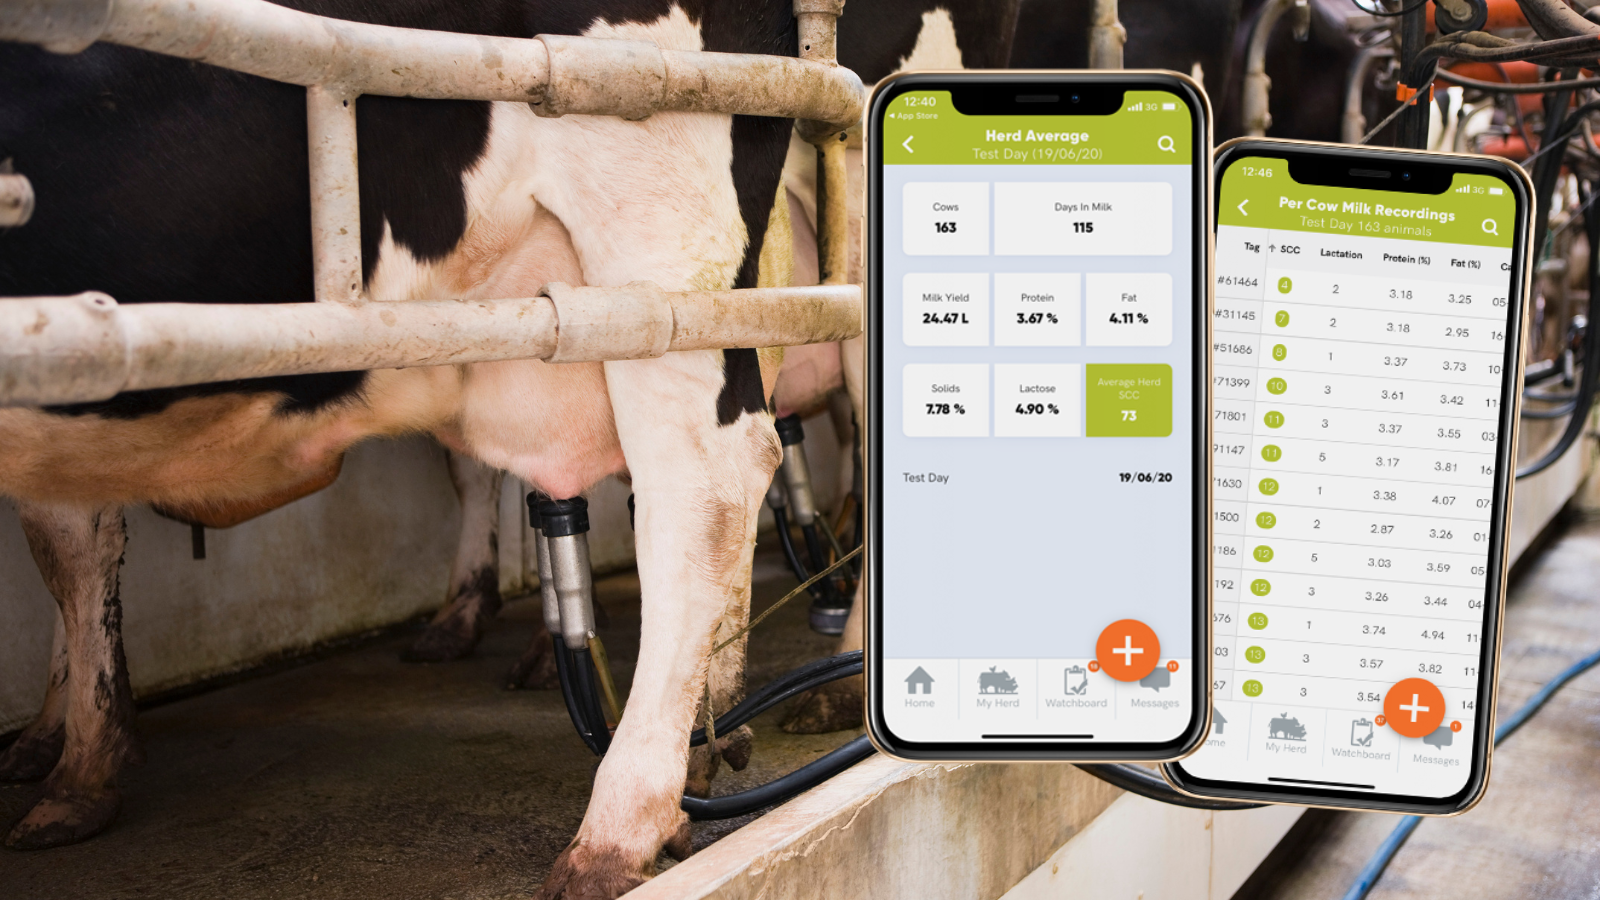 Cattle in parlour milk recordings screens